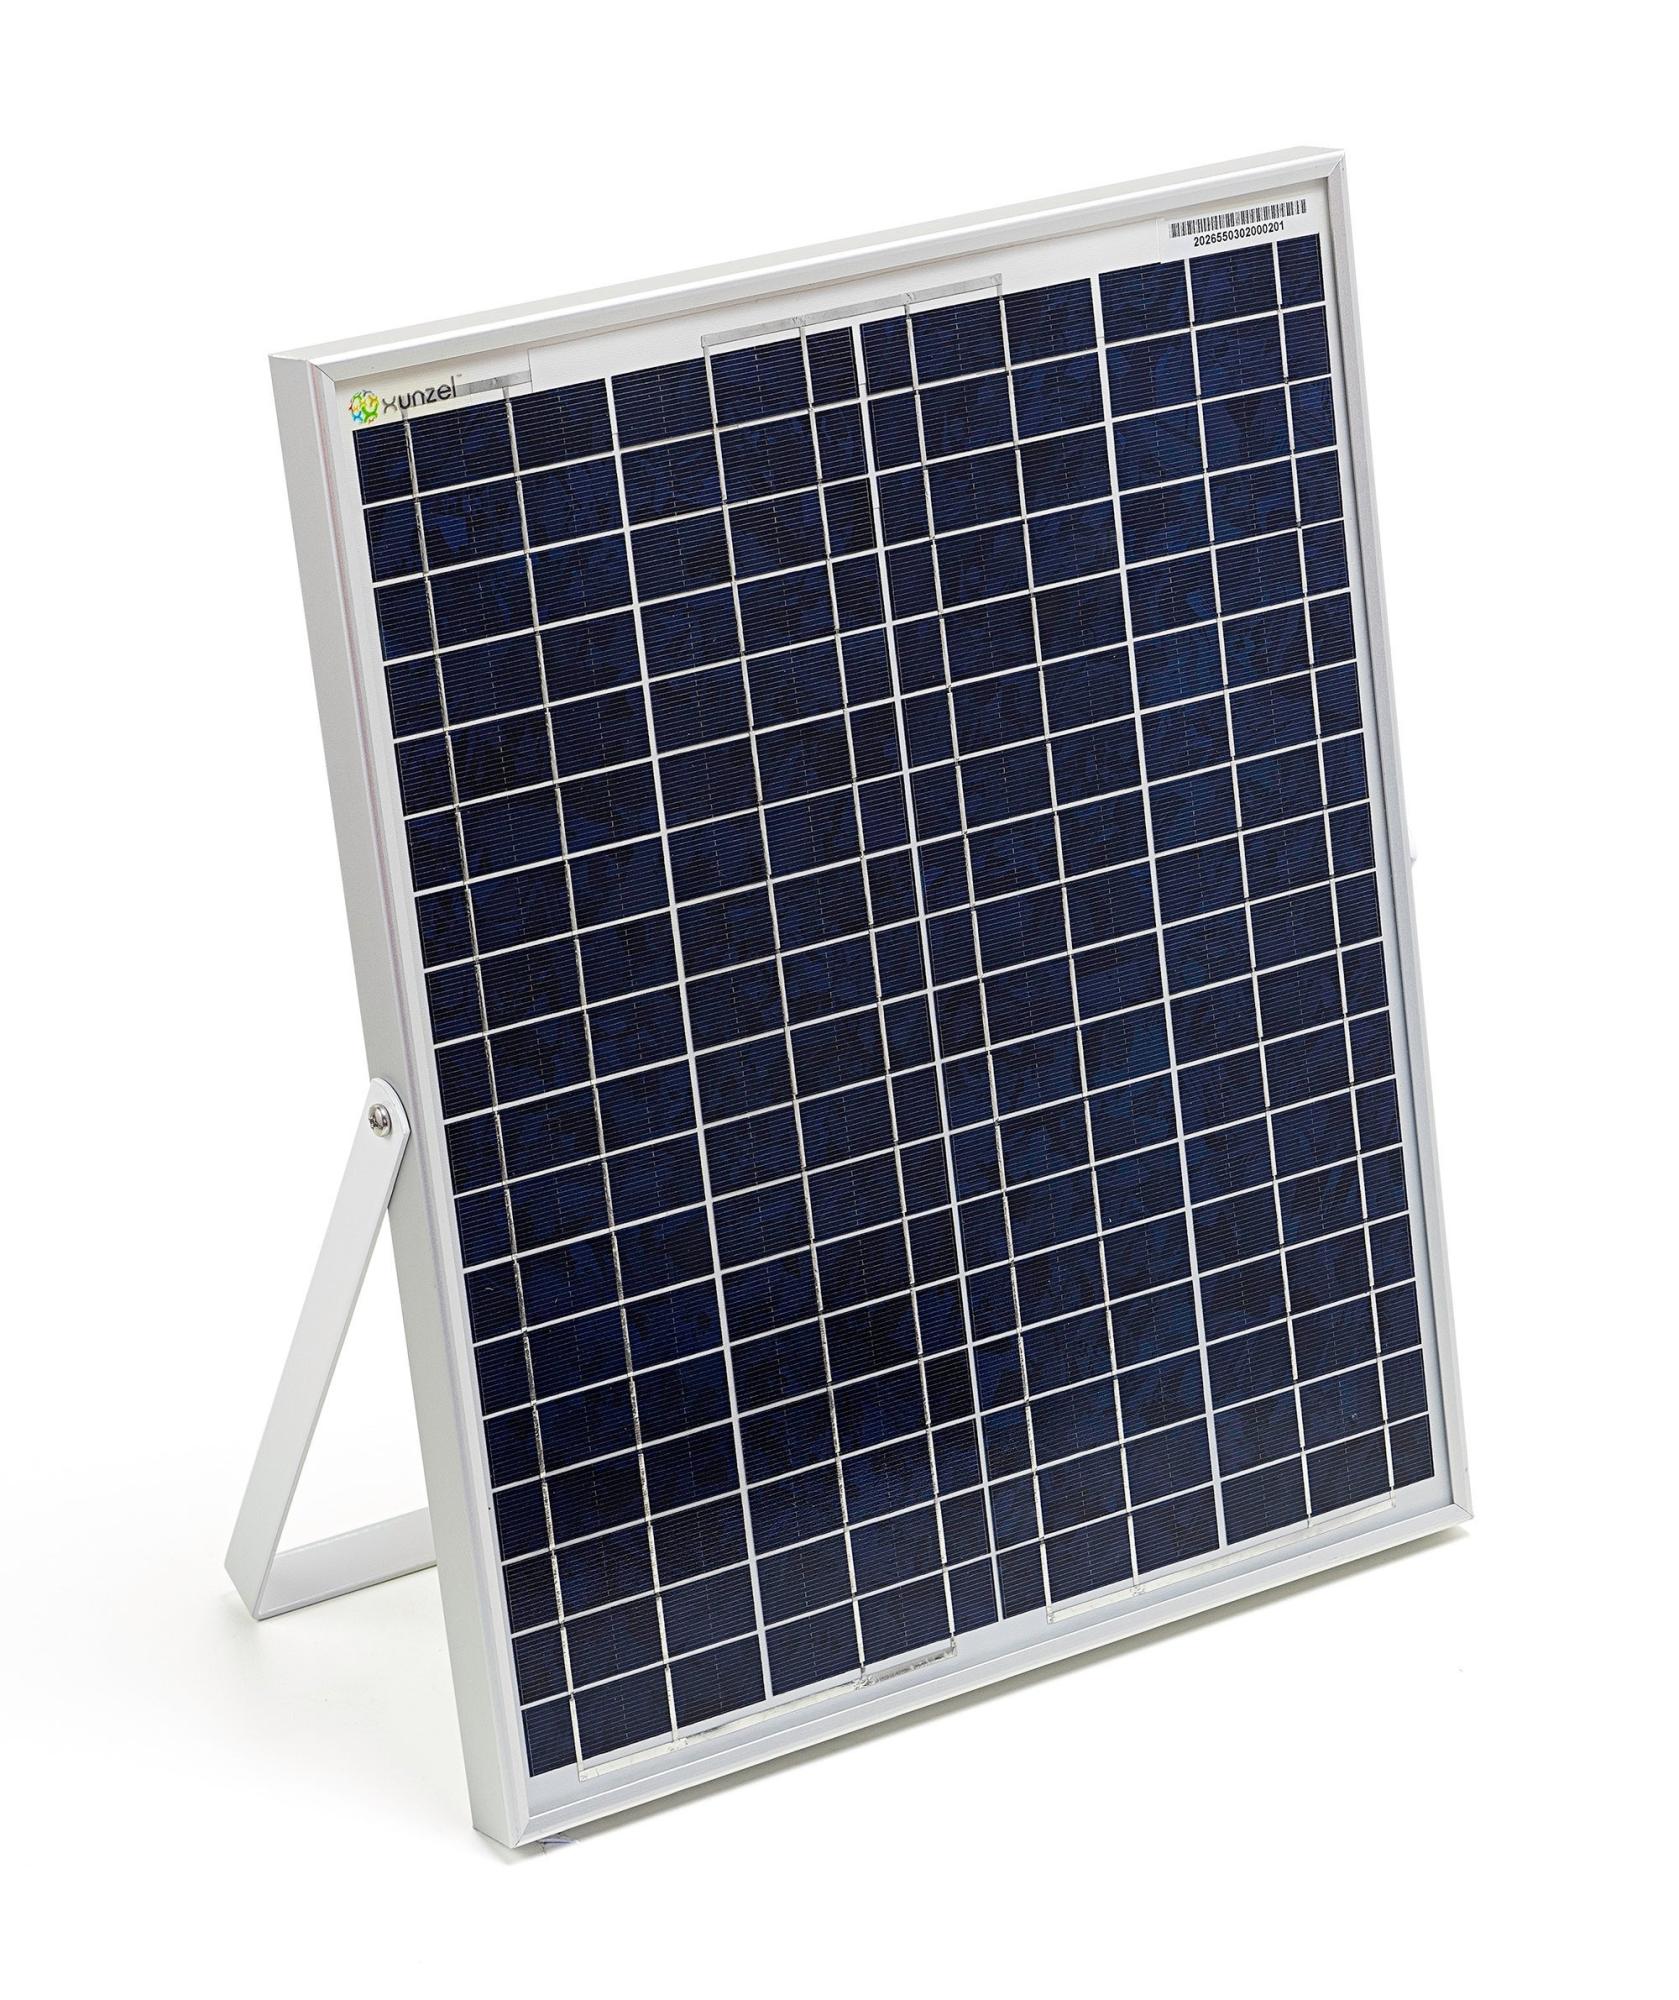 Panel solar fotovoltaico solarpower-xunzel-20w-24v con 4m cable y soporte